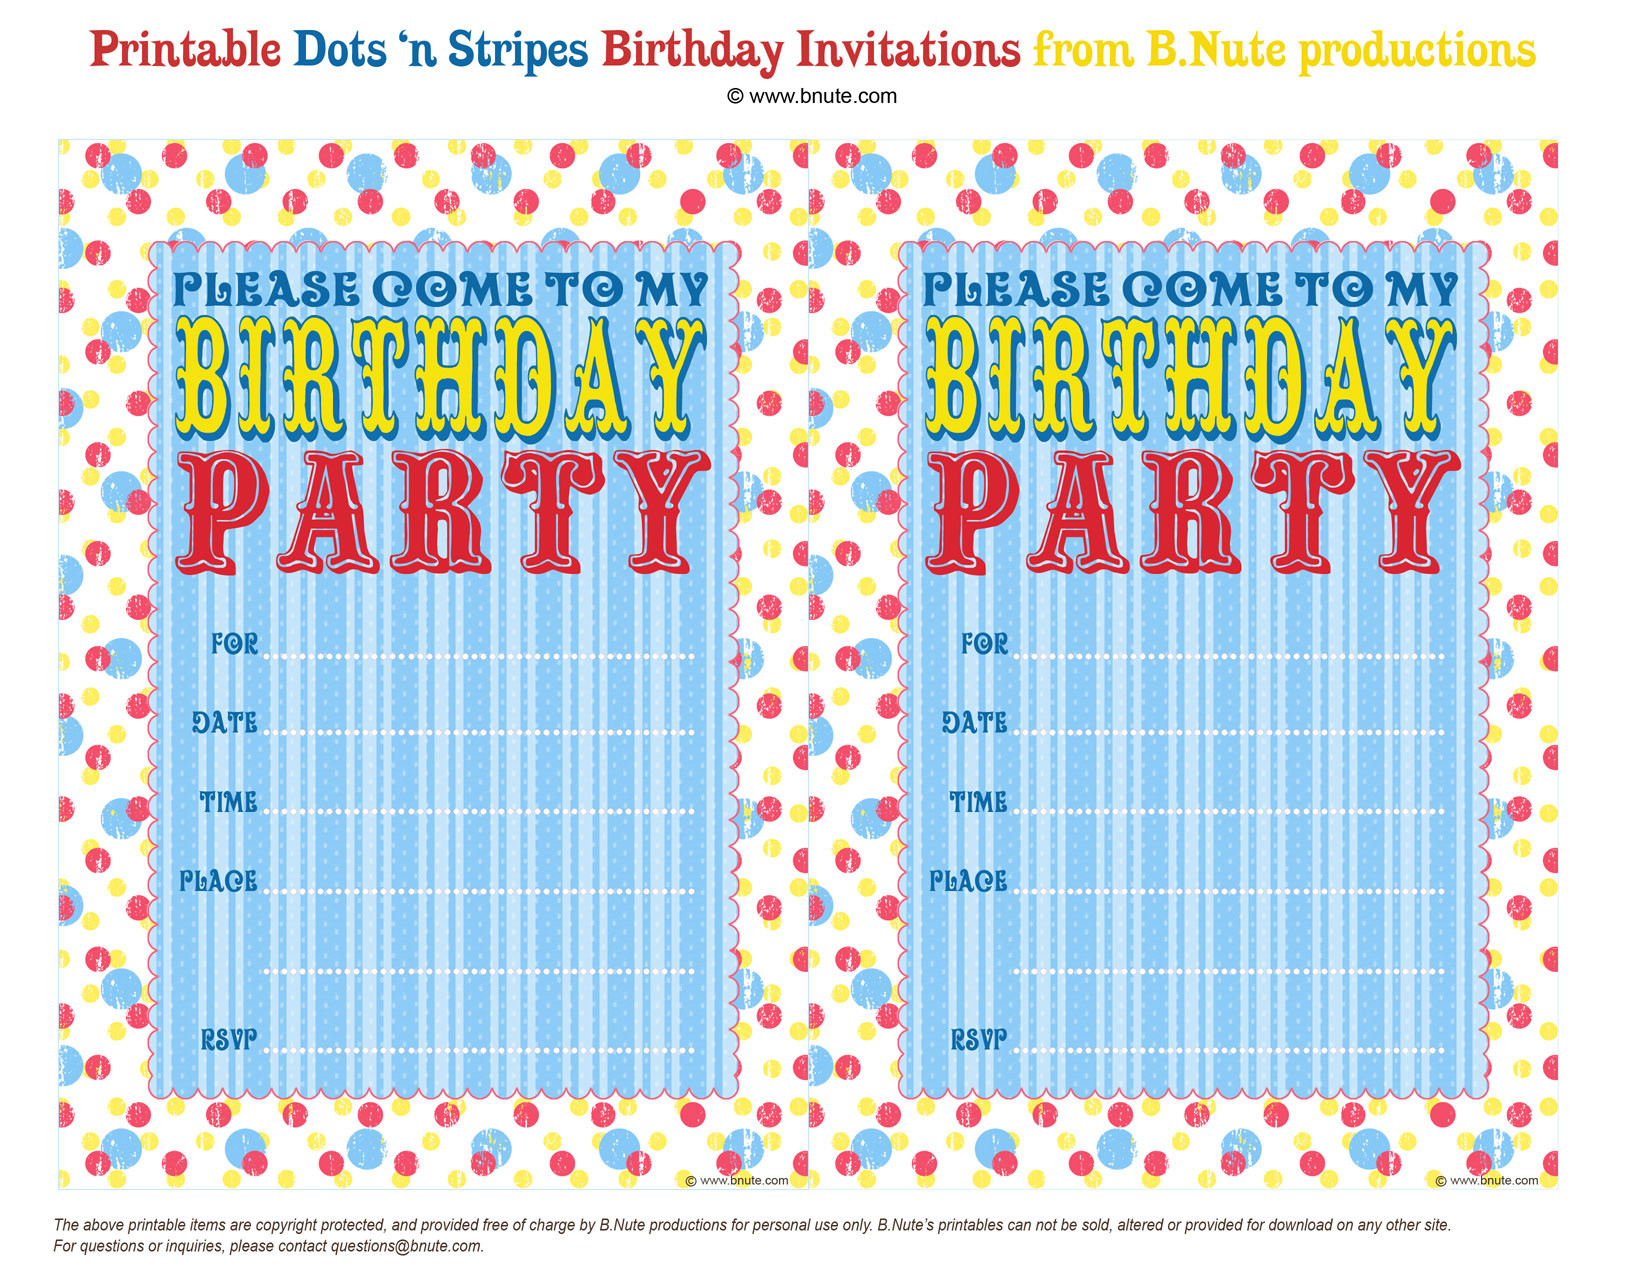 Print Birthday Invitations
 bnute productions Free Printable Dots n Stripes Birthday